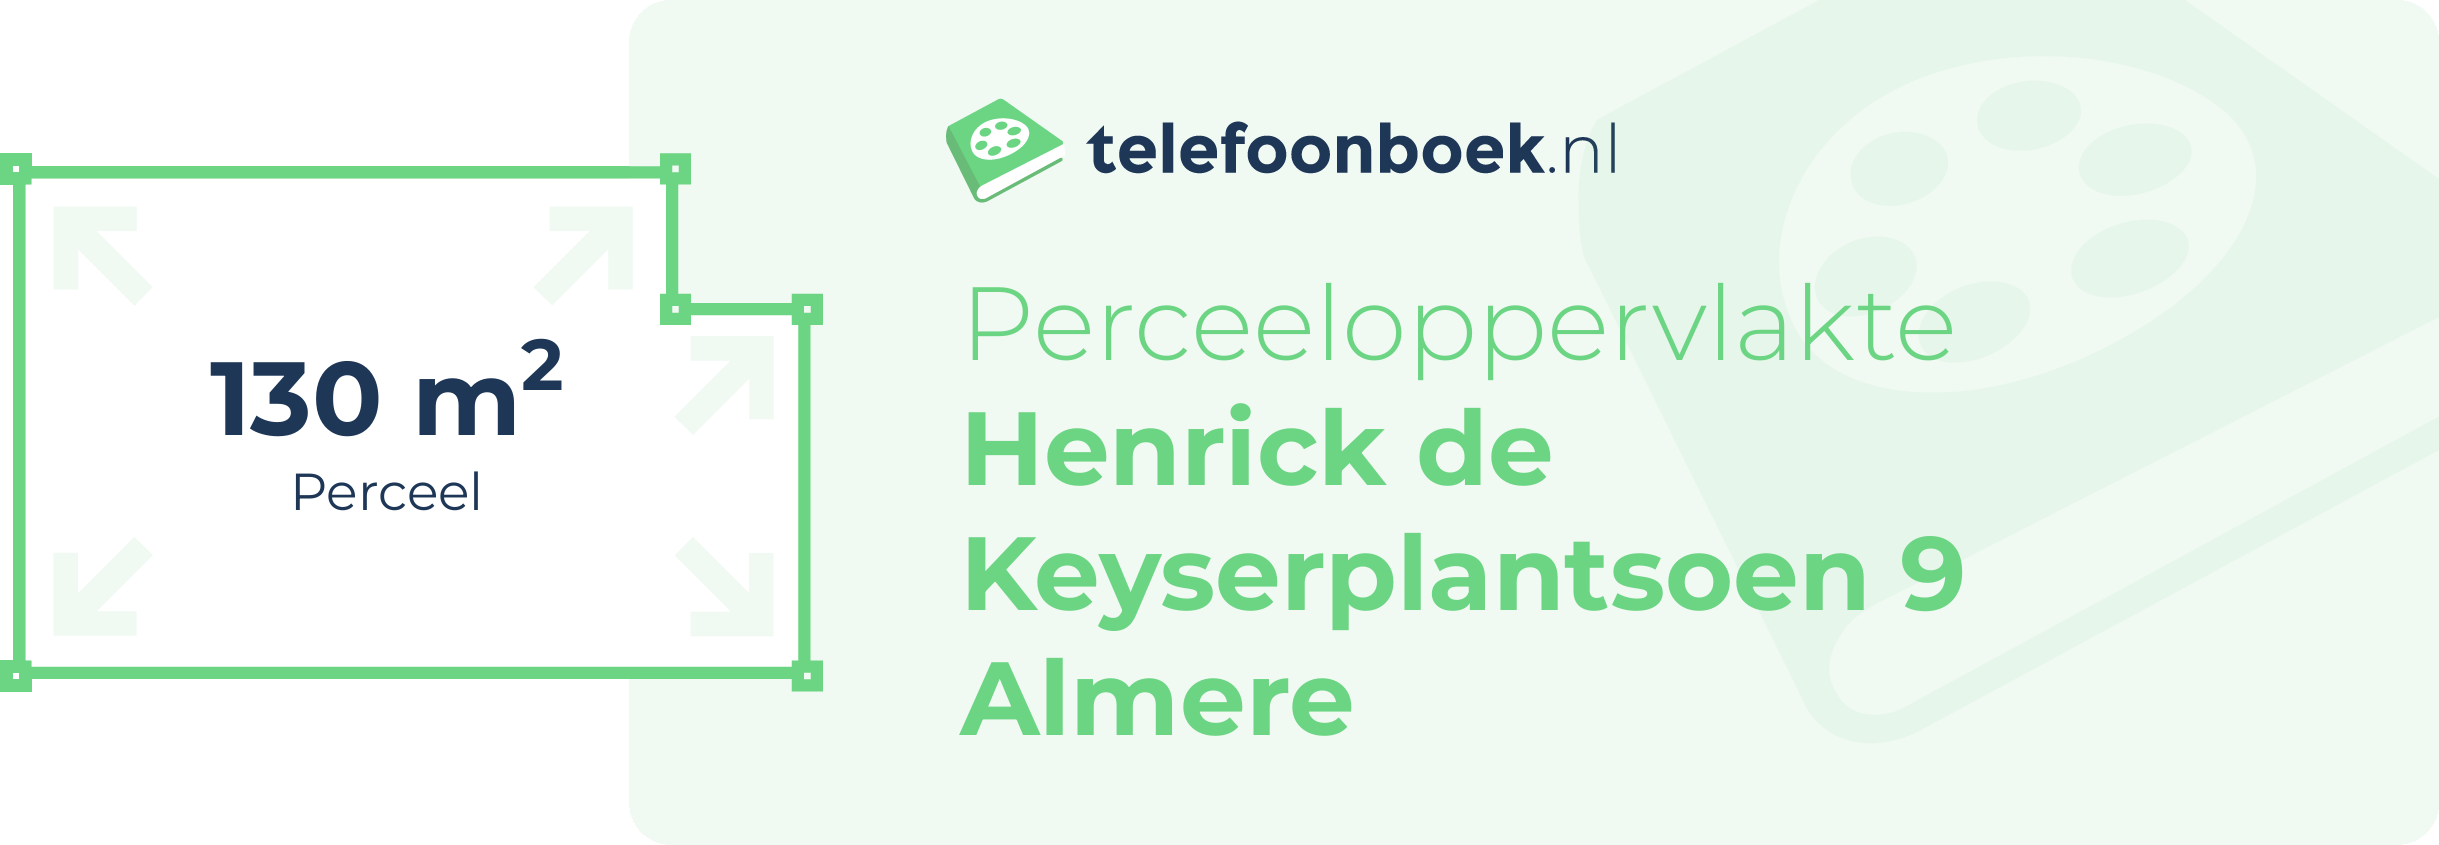 Perceeloppervlakte Henrick De Keyserplantsoen 9 Almere